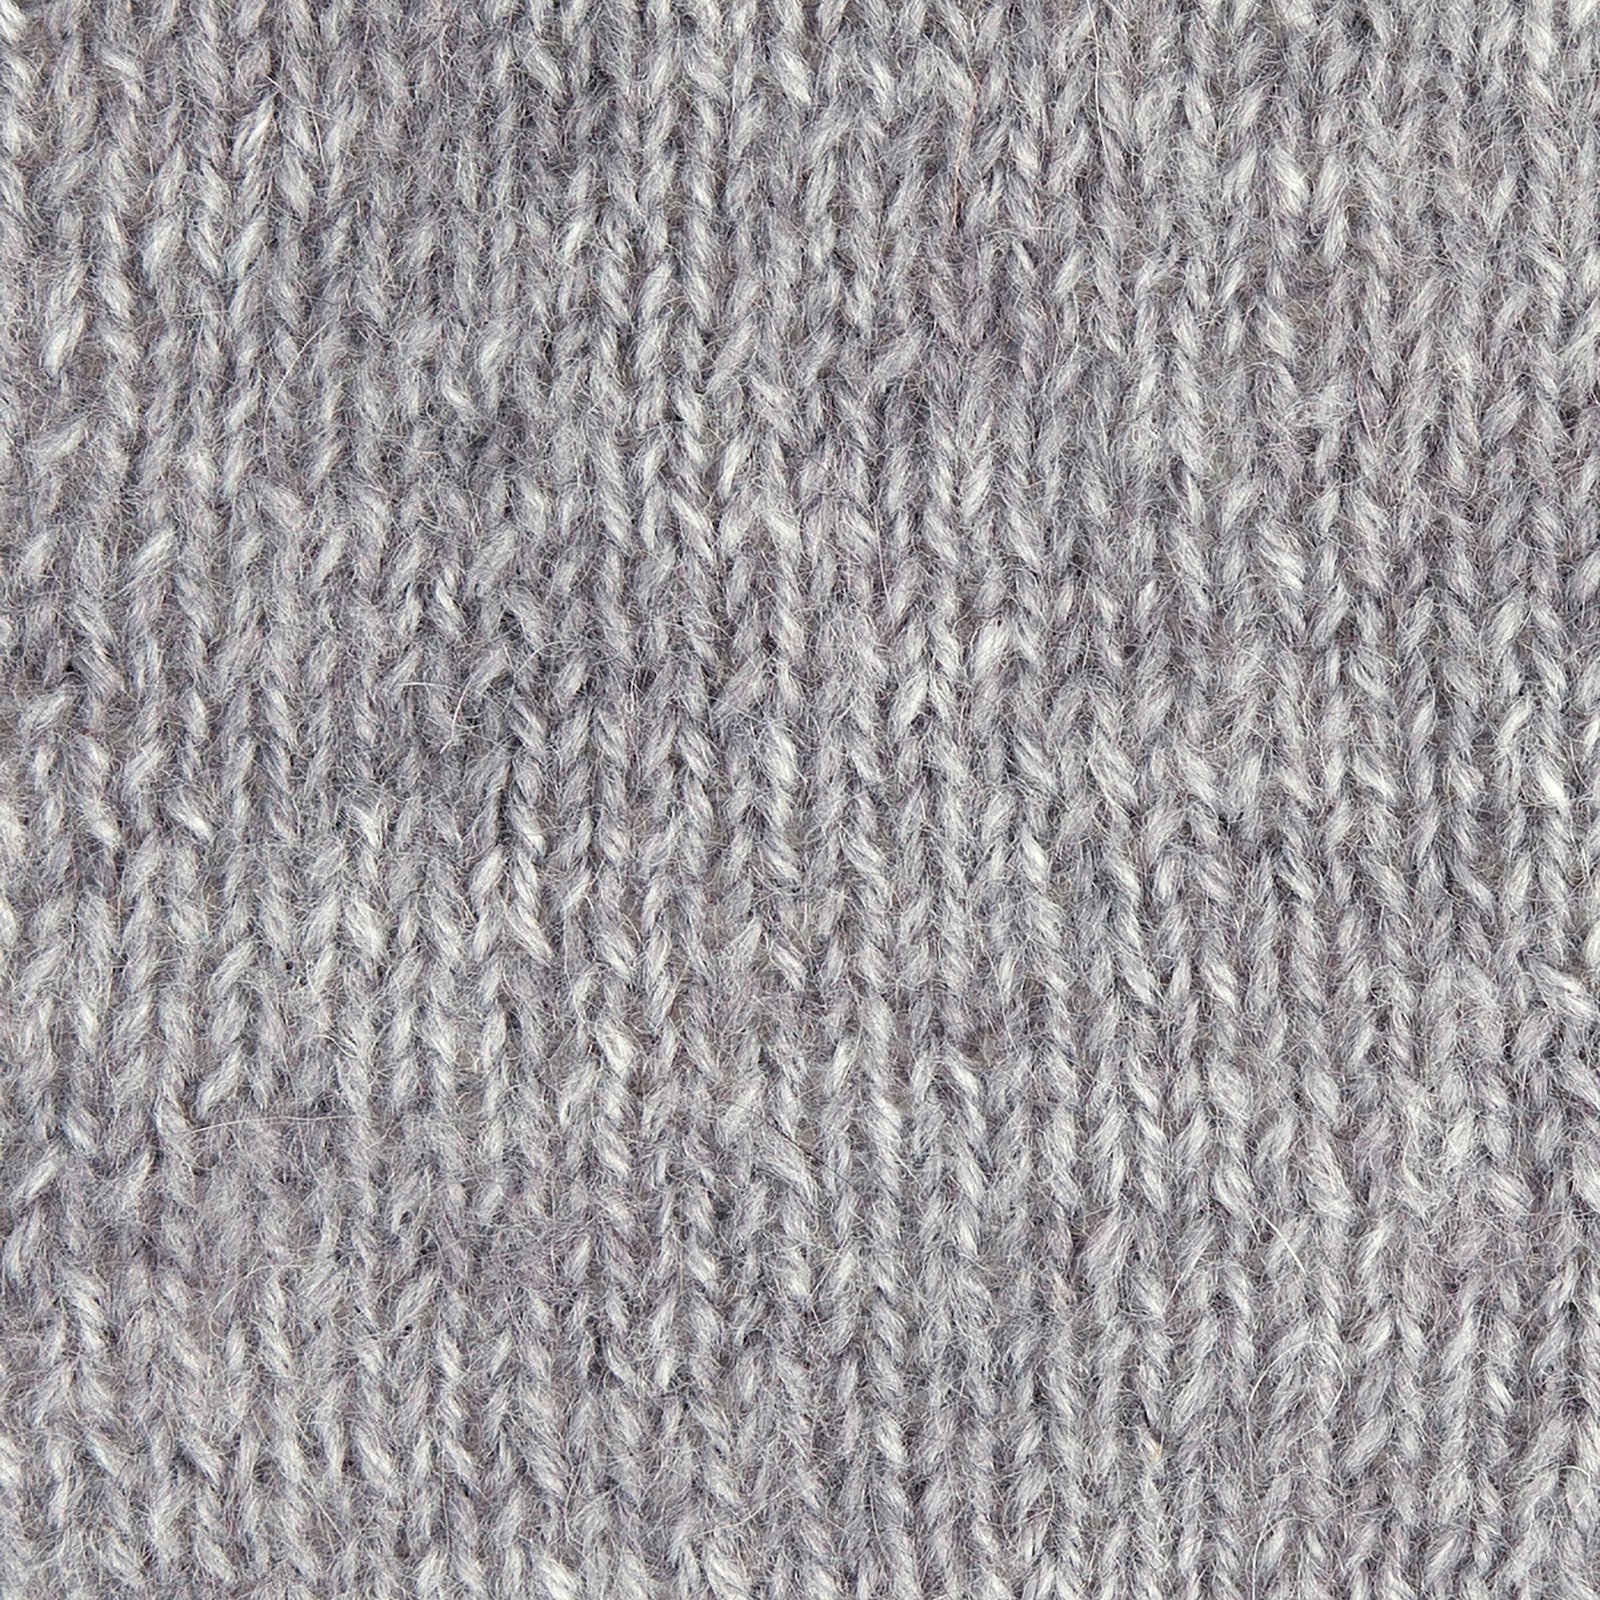 FRAYA, kid mohair mixed yarn "Fluffy", light grey 90066340_sskit